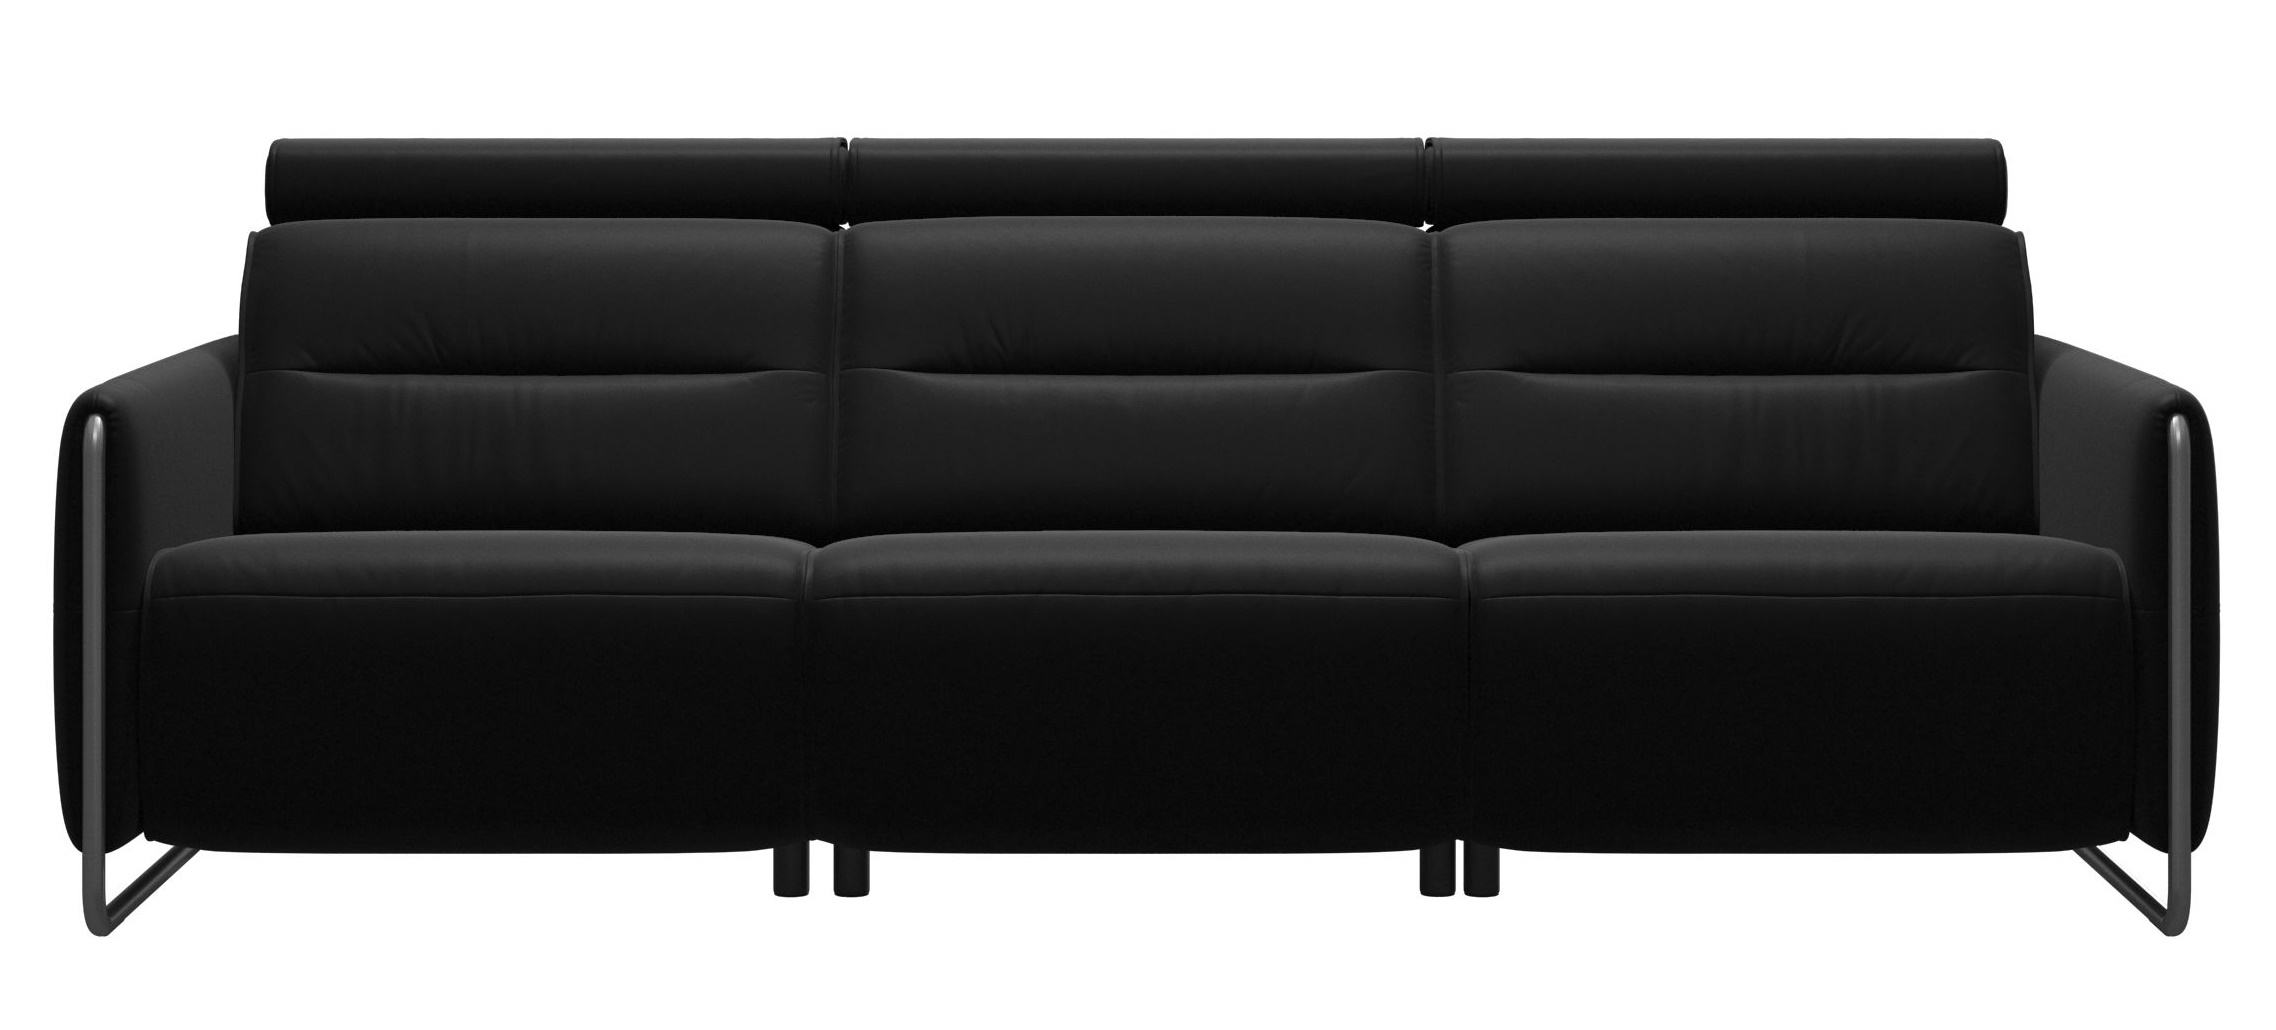 Canapea cu 3 locuri Stressless Emily Arm Steel reclinere laterale brate crom tapiterie piele Batick Black sensodays.ro